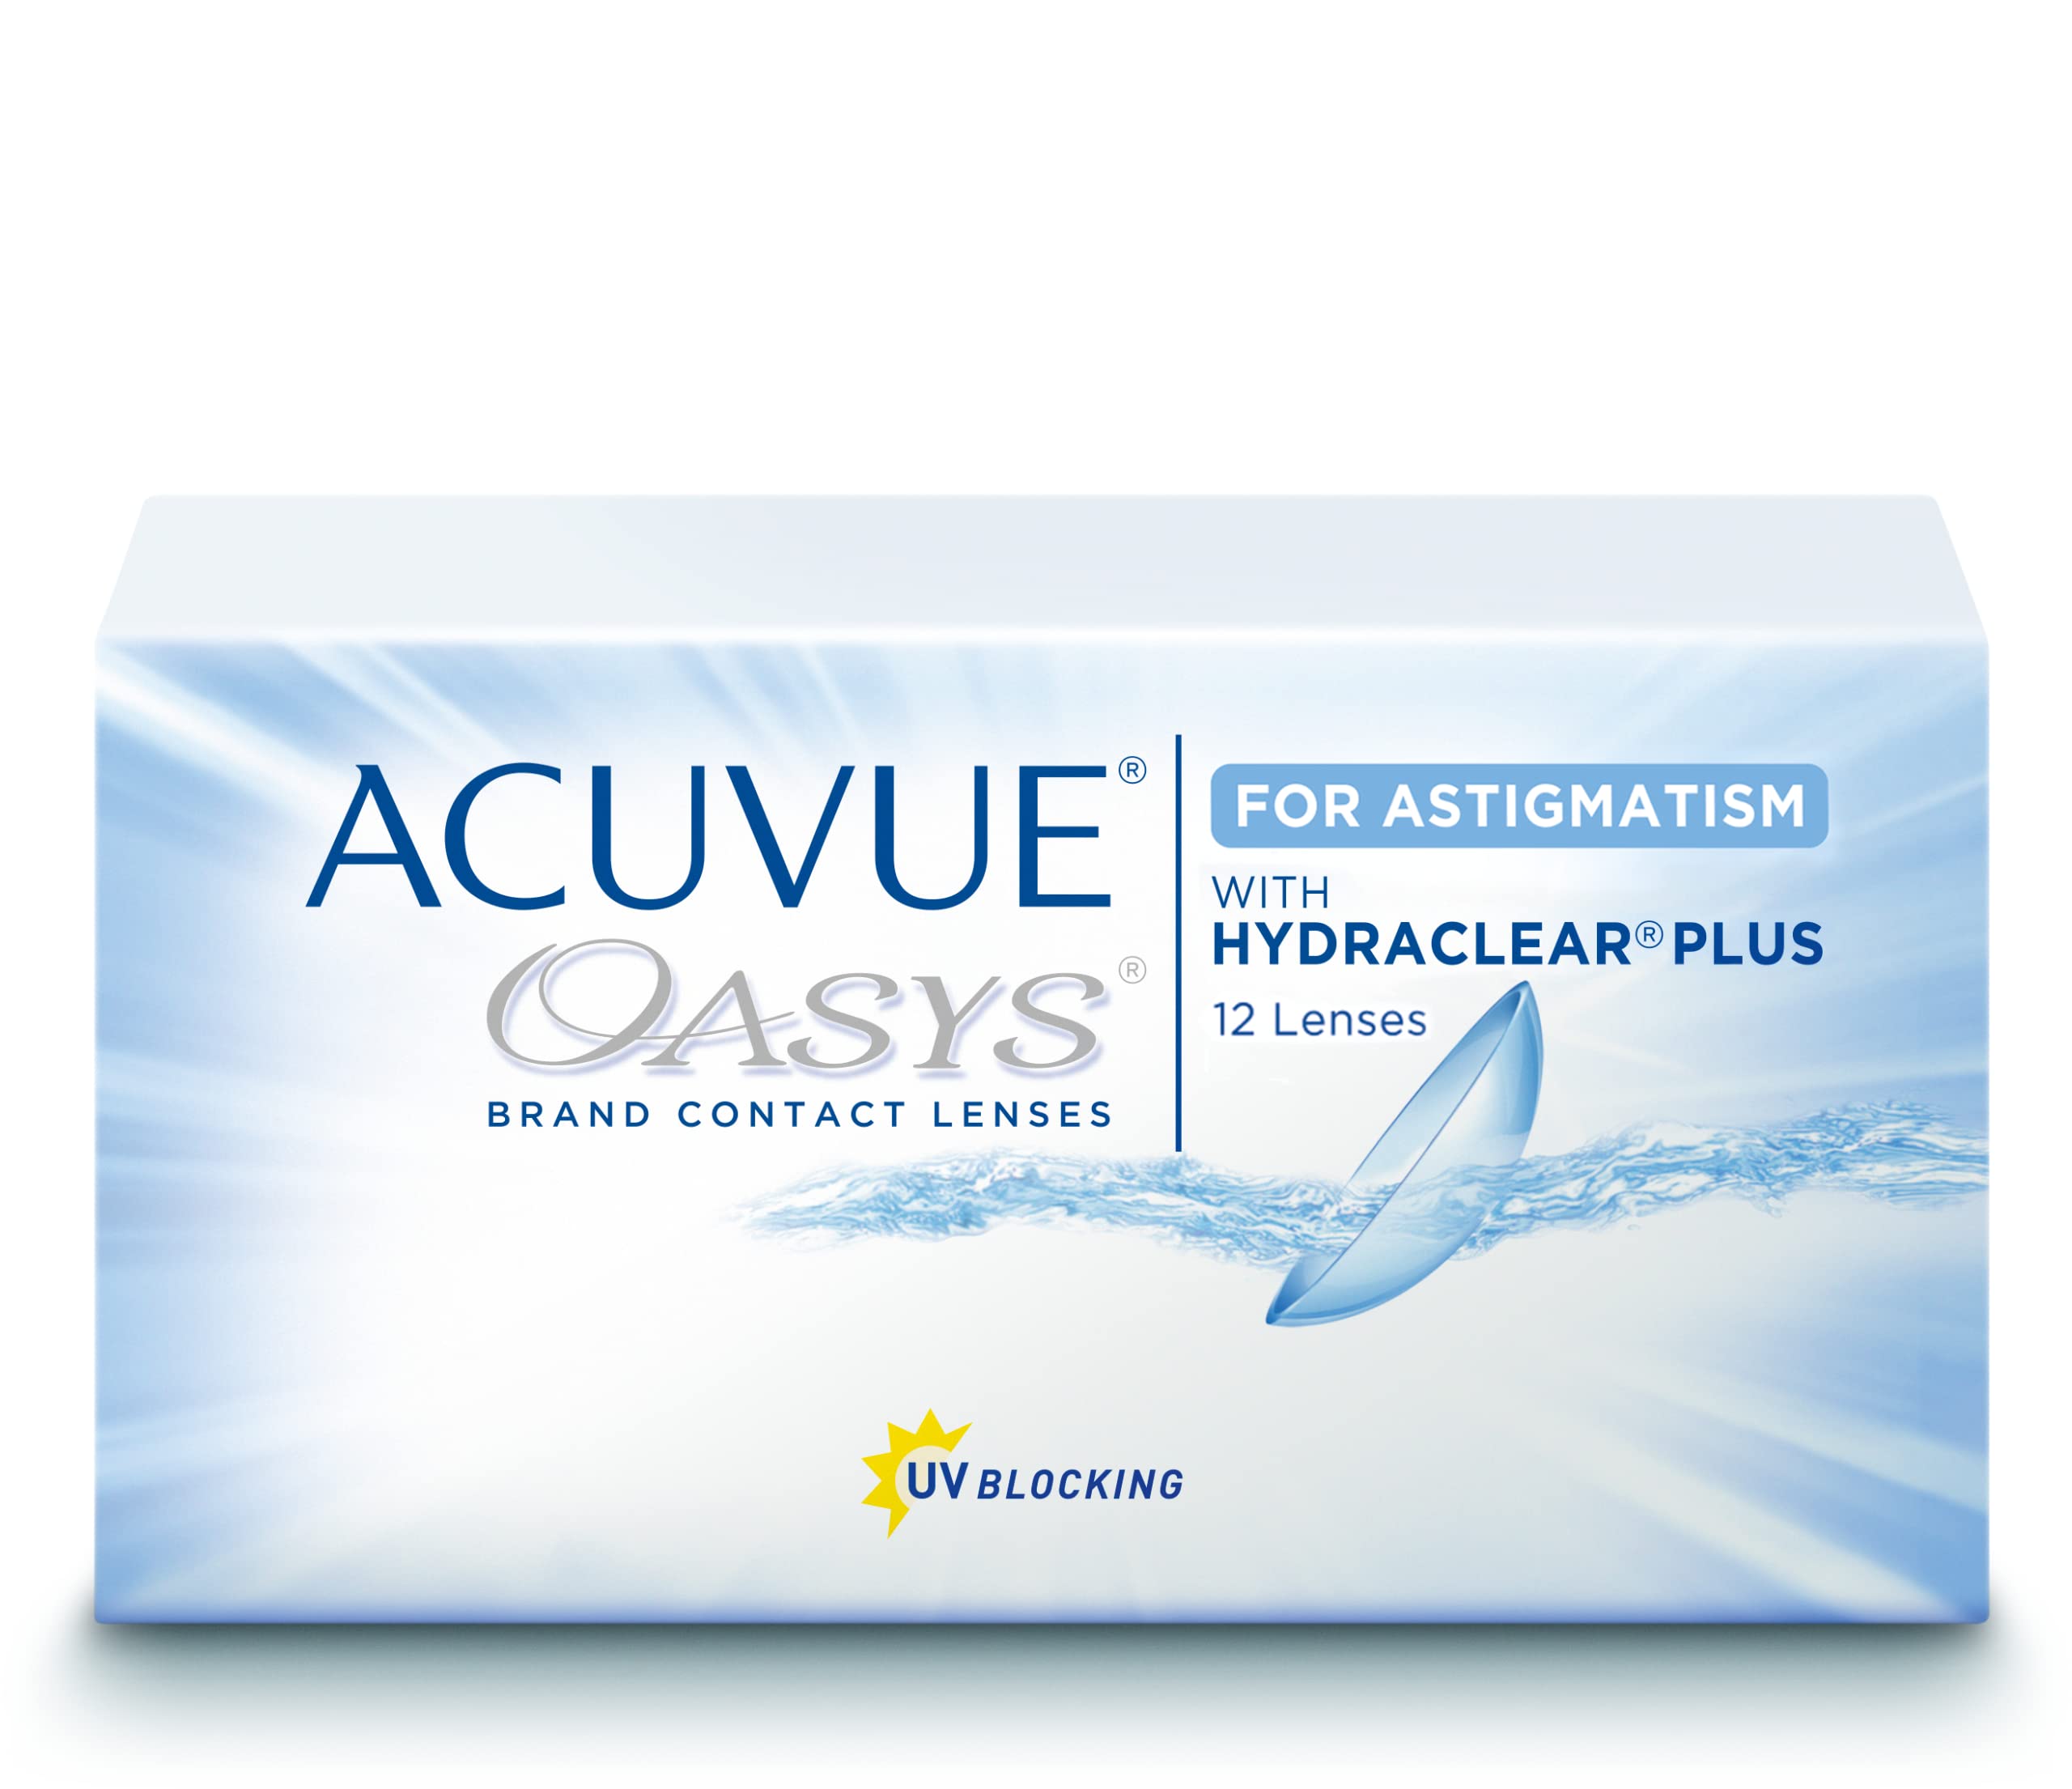 Acuvue Oasys for Astigmatism 2-Wochenlinsen weich, 12 Stück/BC 8.6 mm/DIA 14.5 / CYL -2.75 / Achse 160 / -7 Dioptrien